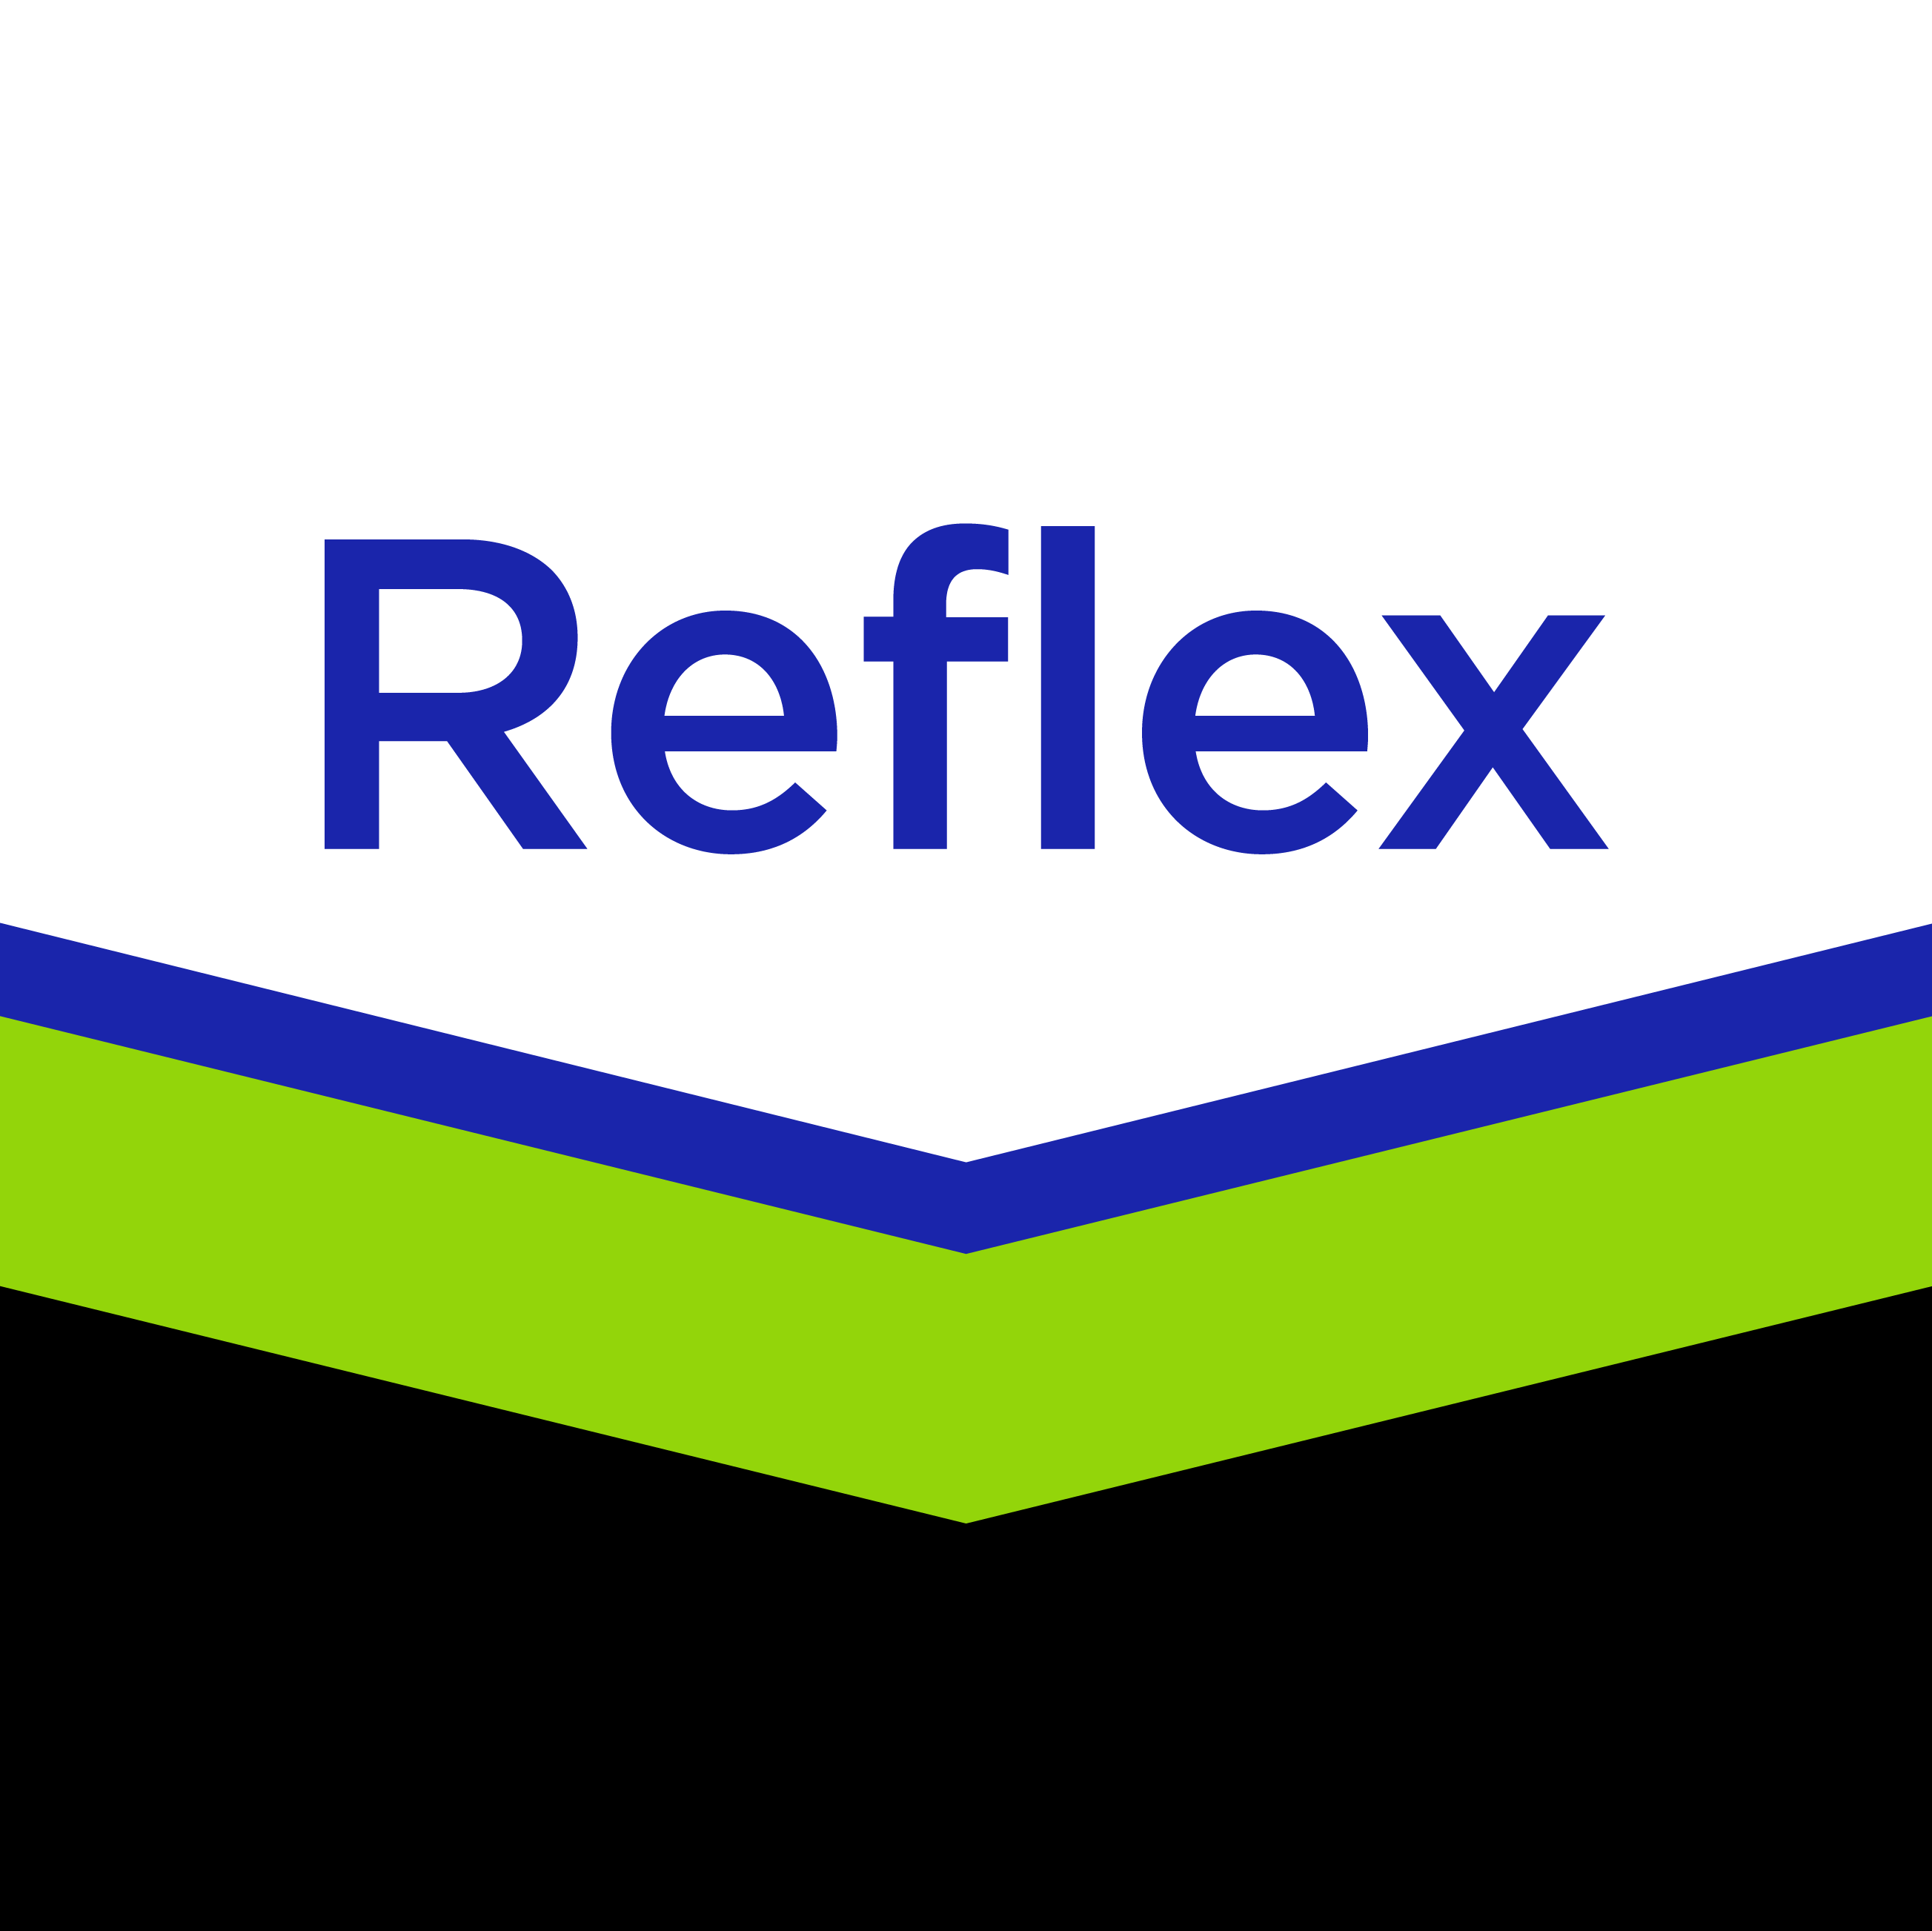 Club Image for REFLEX RACING CLUB